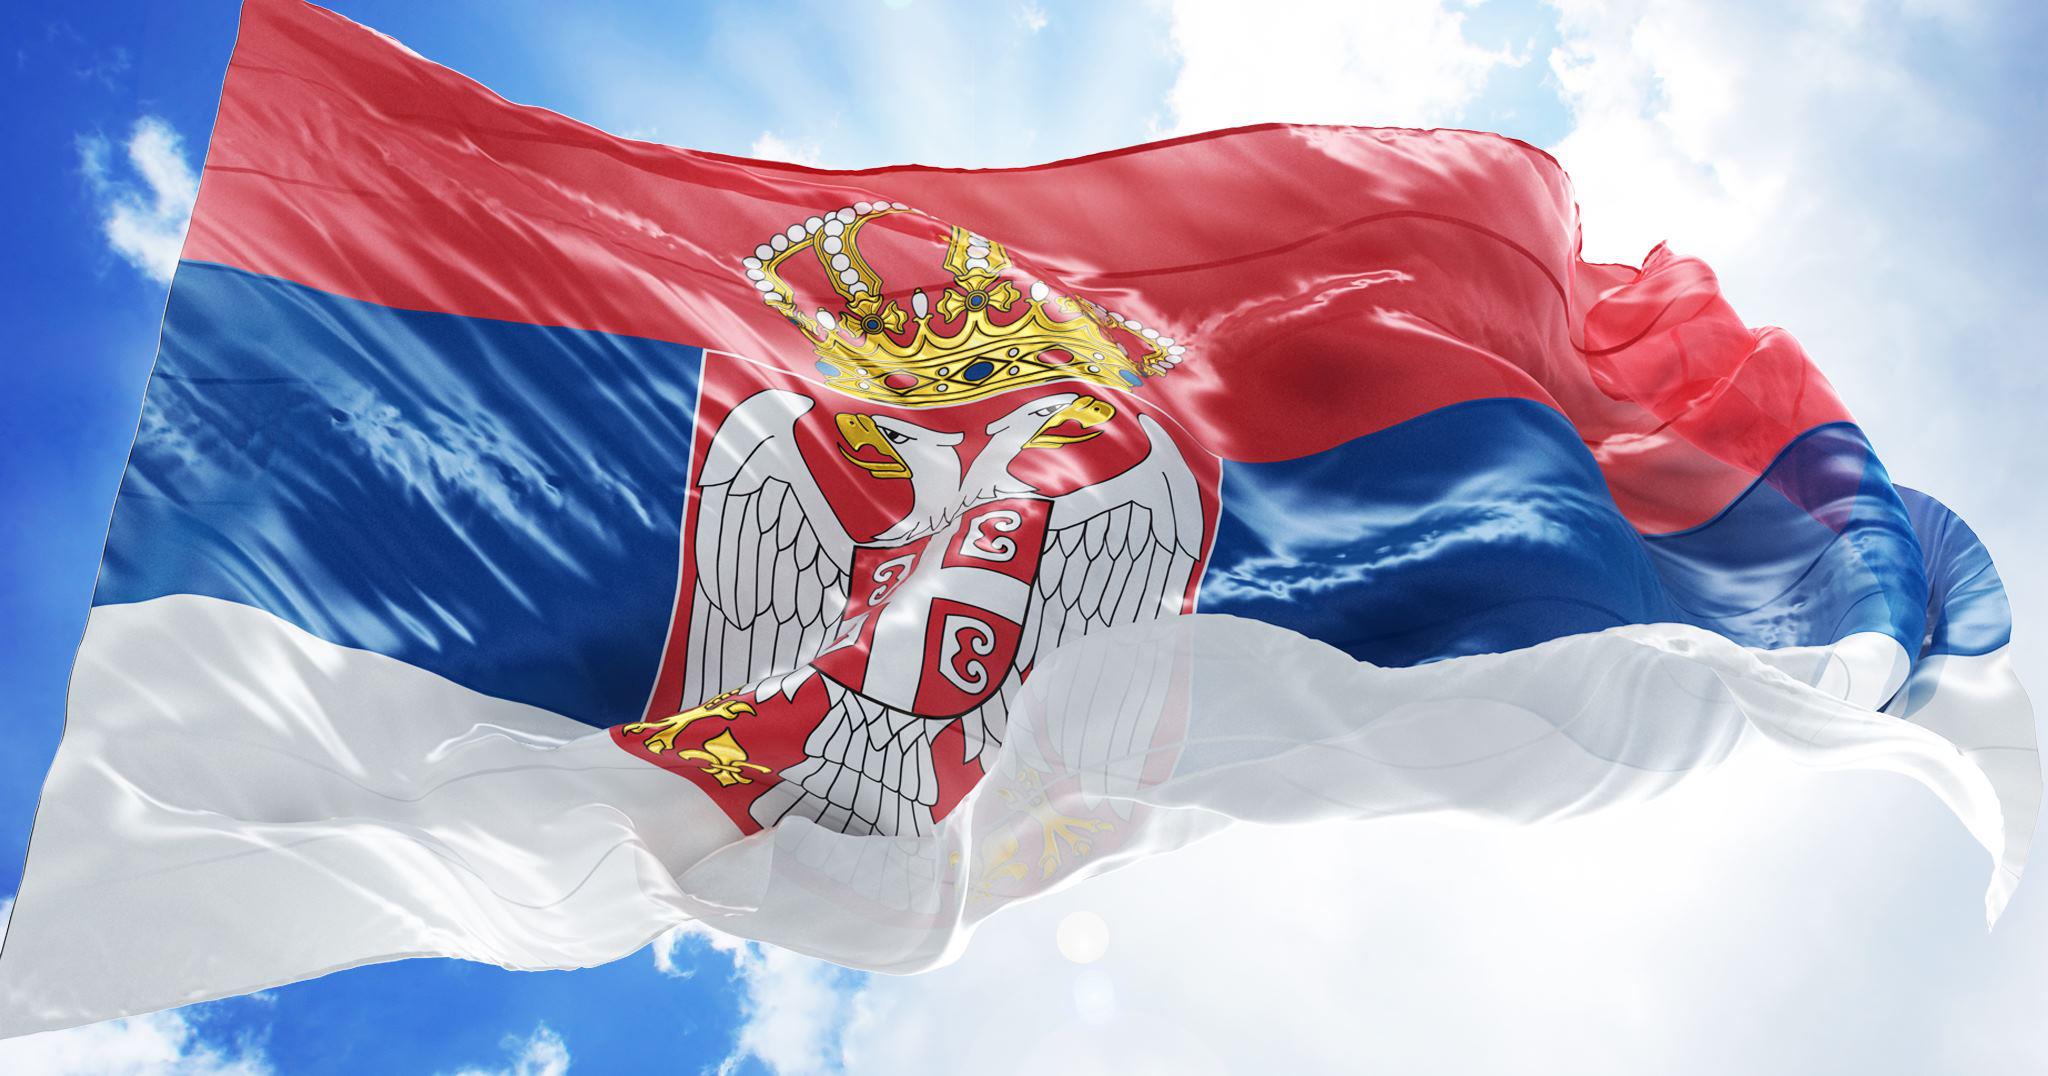 http://www.srbijadanas.net/wp-content/uploads/2015/01/zastava-trobojka-srbija.jpg